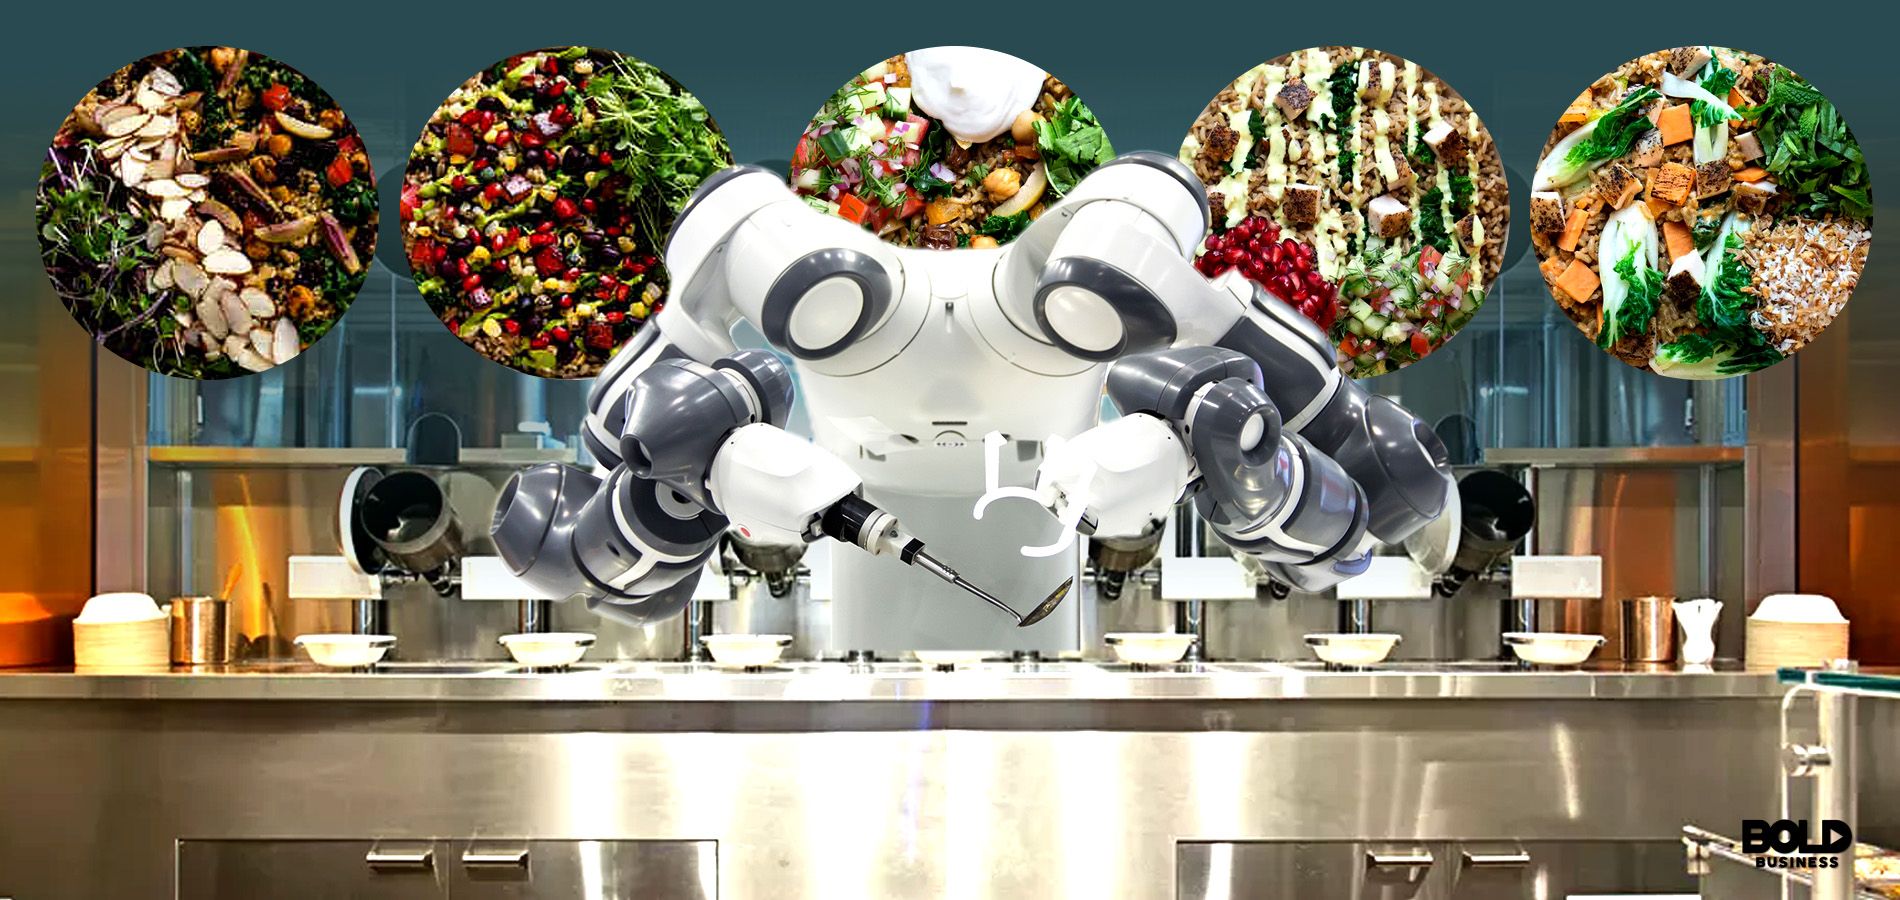 Kitchen Robot By Spyce 